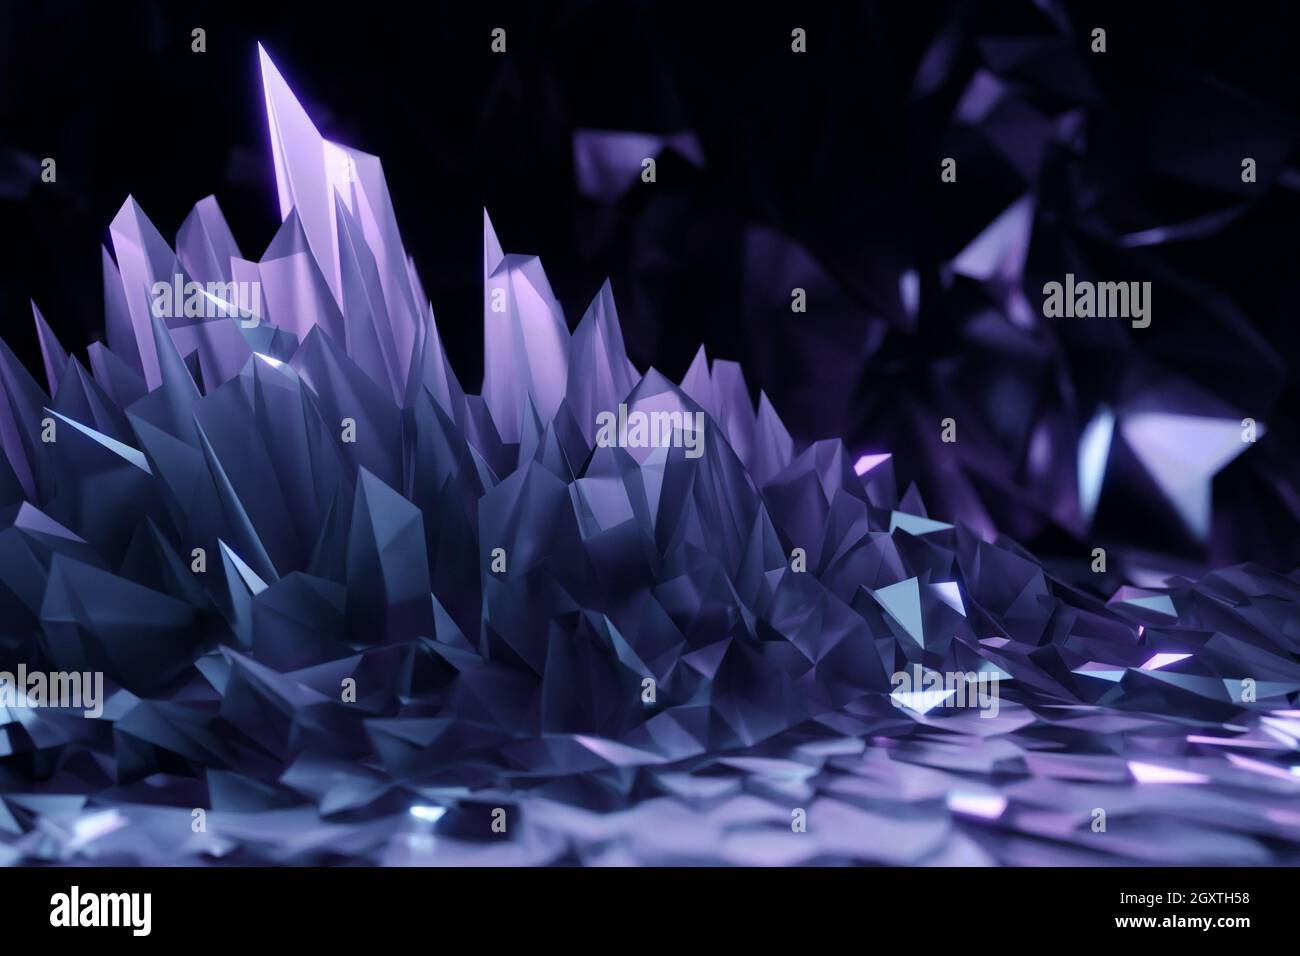 purple 3d background effects